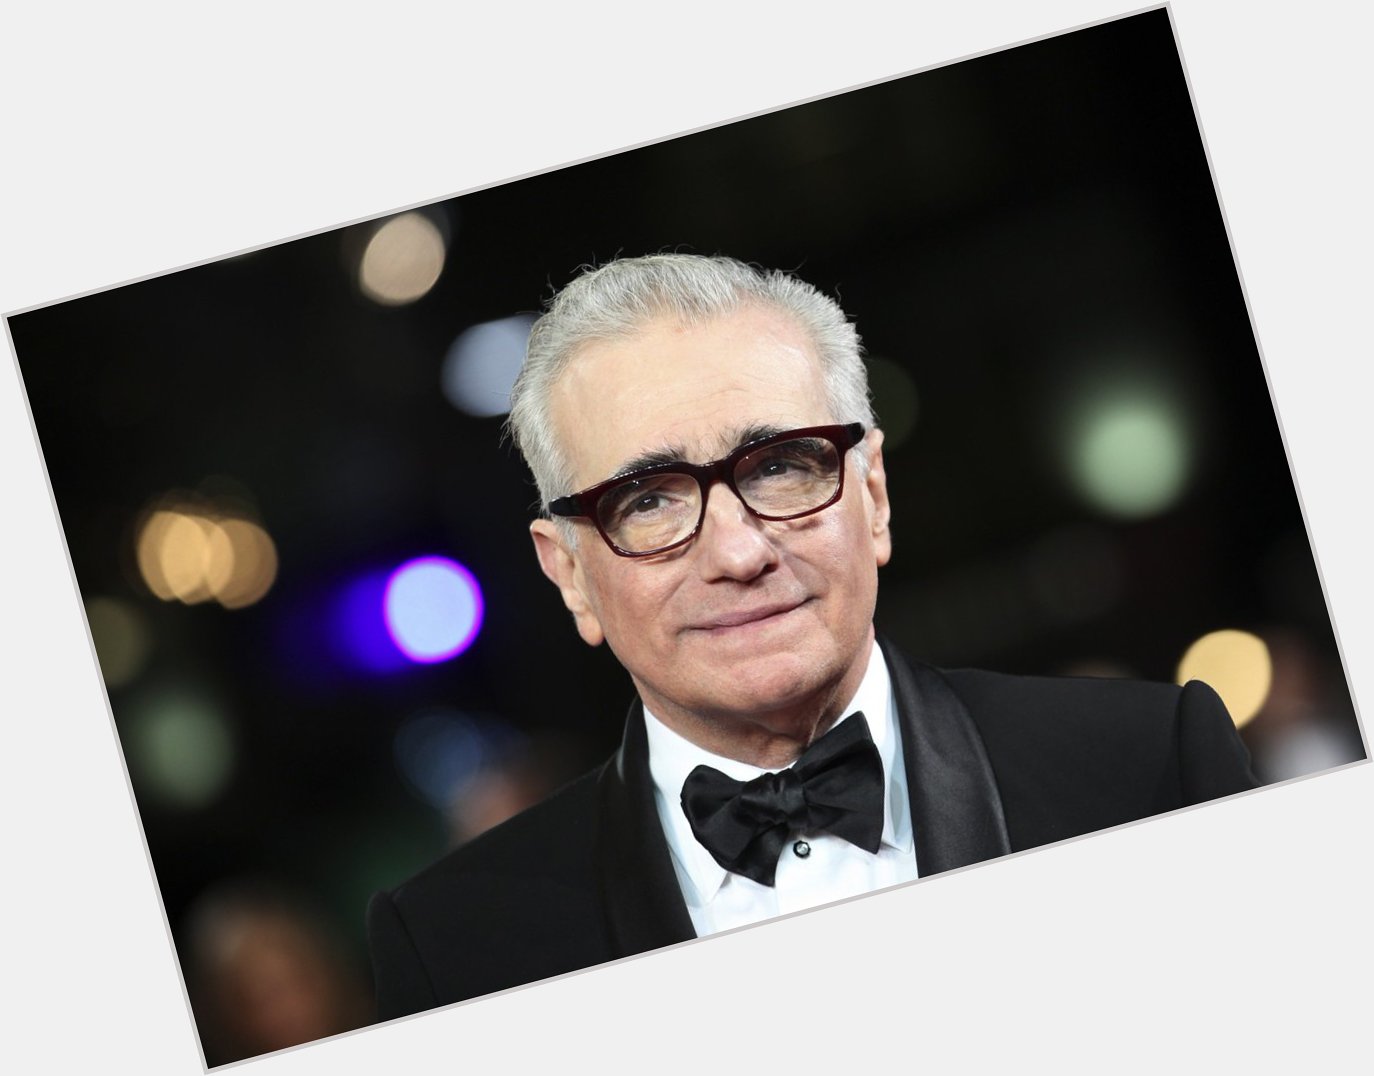  ReinaaRoyale: Happy birthday to the legendary Martin Scorsese! 